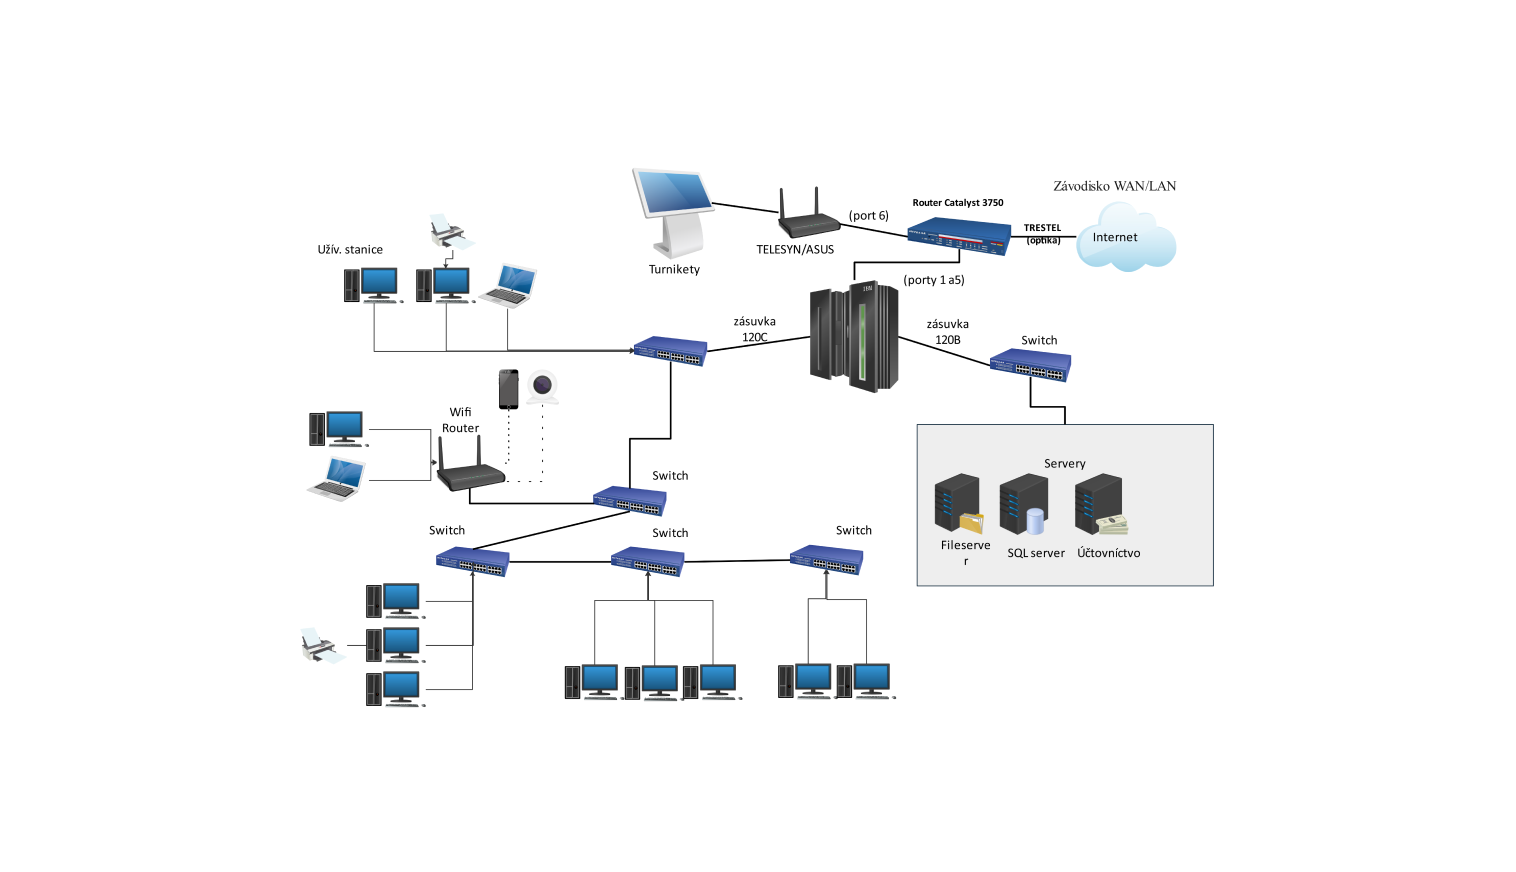 Network Diagram for lan